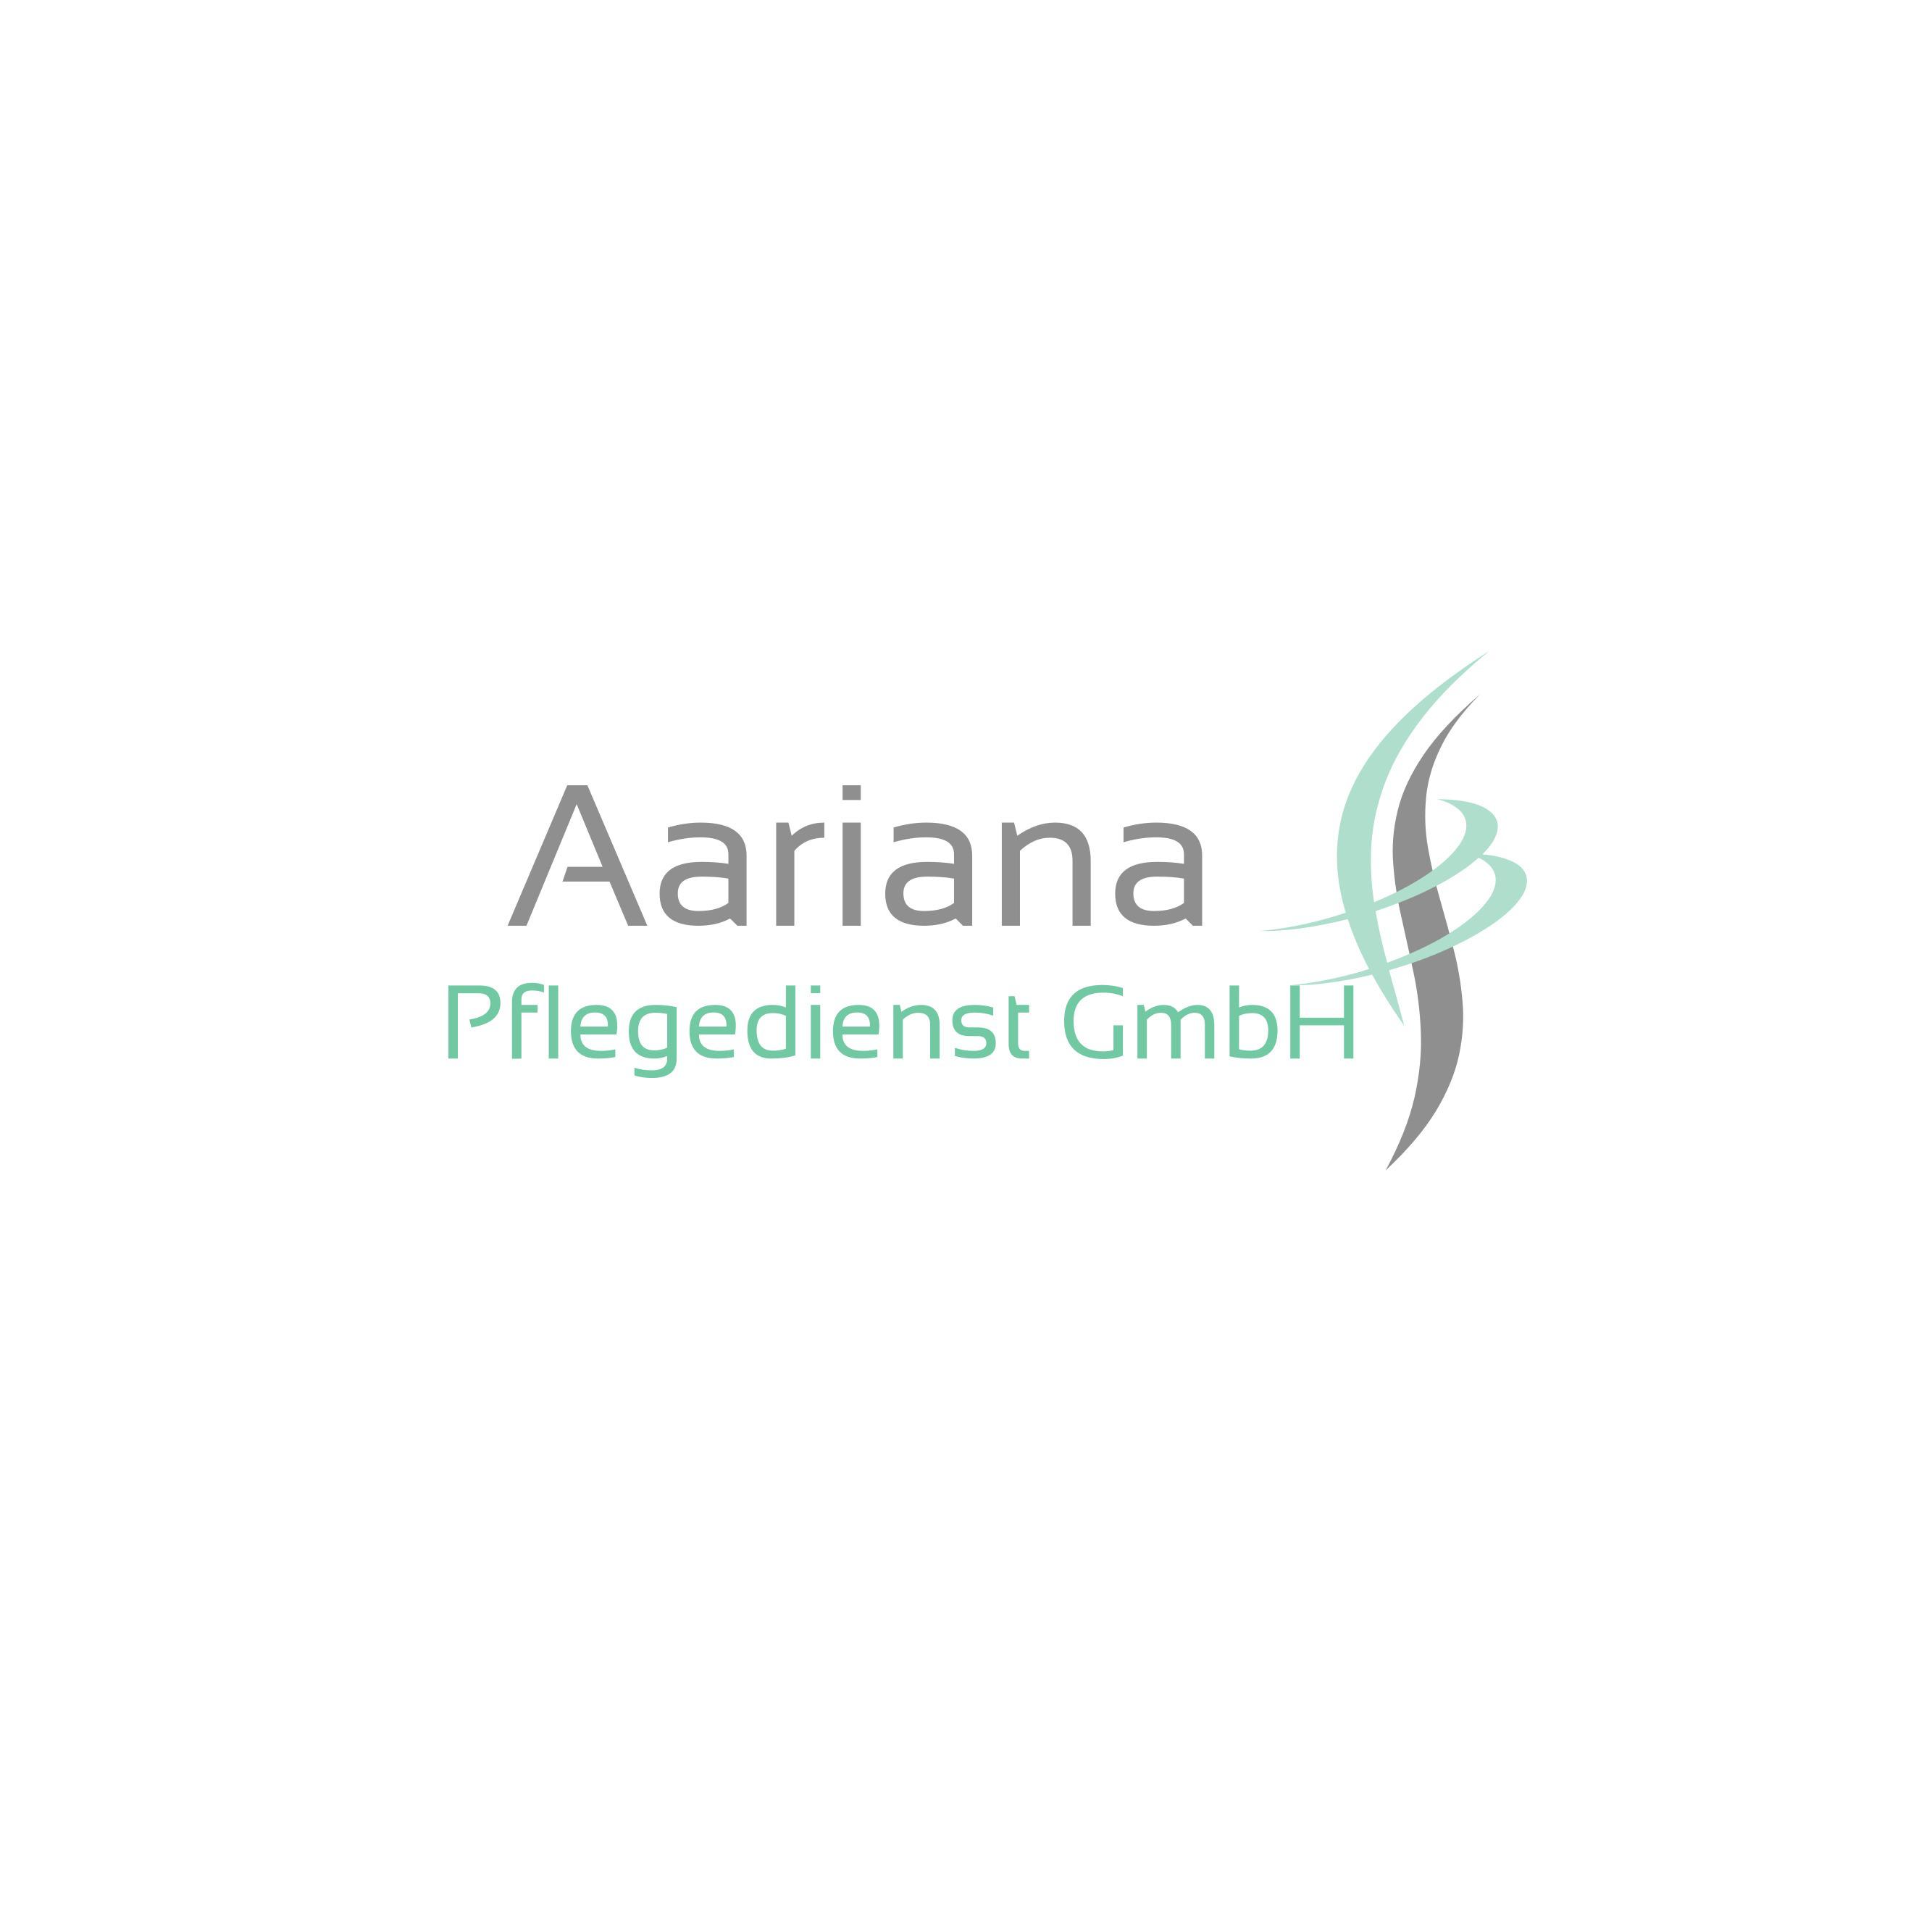 Aariana Pflegedienst GmbH in Burgwedel - Logo